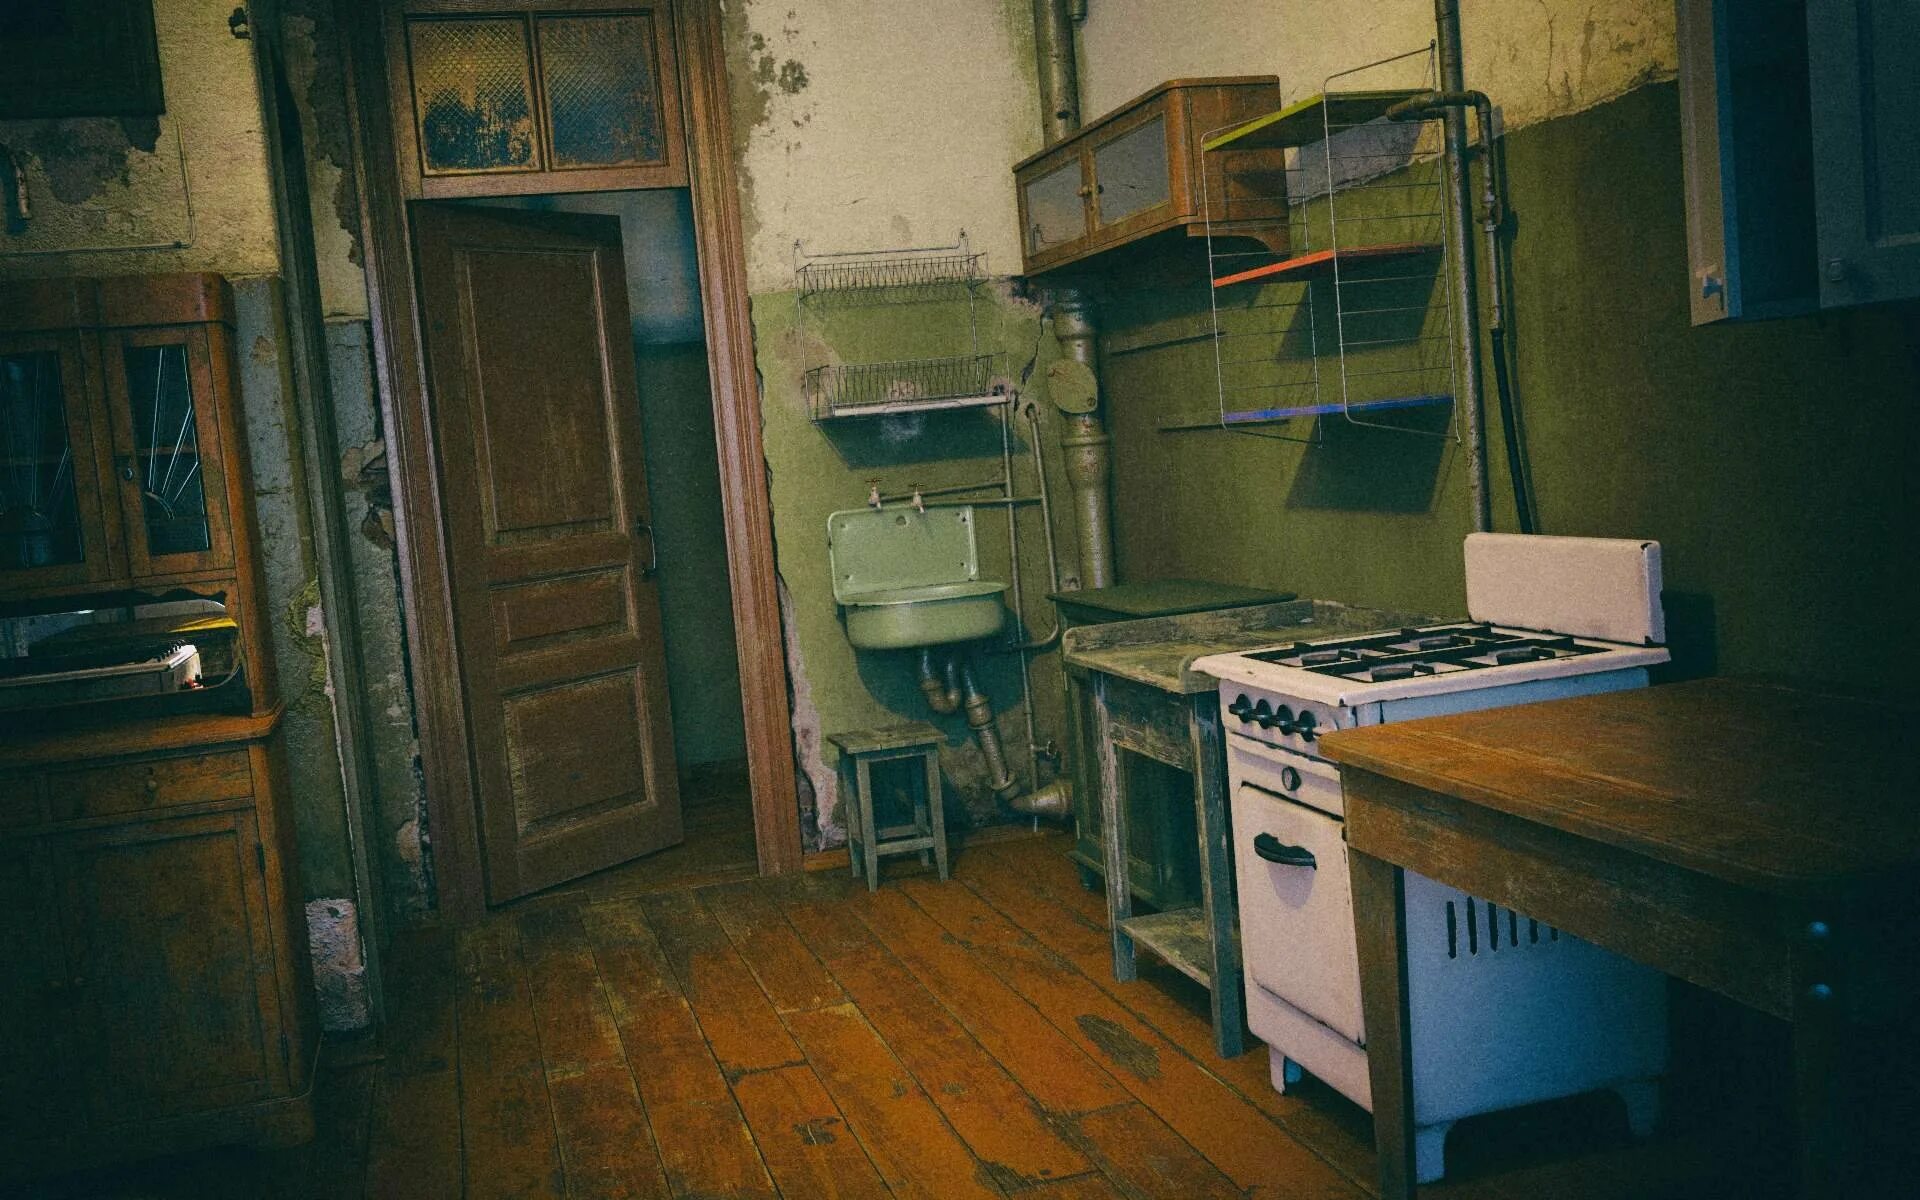 Аренда коммуналки. Советская кухня. Старая квартира. Комната в коммуналке. Кухня в старой квартире.